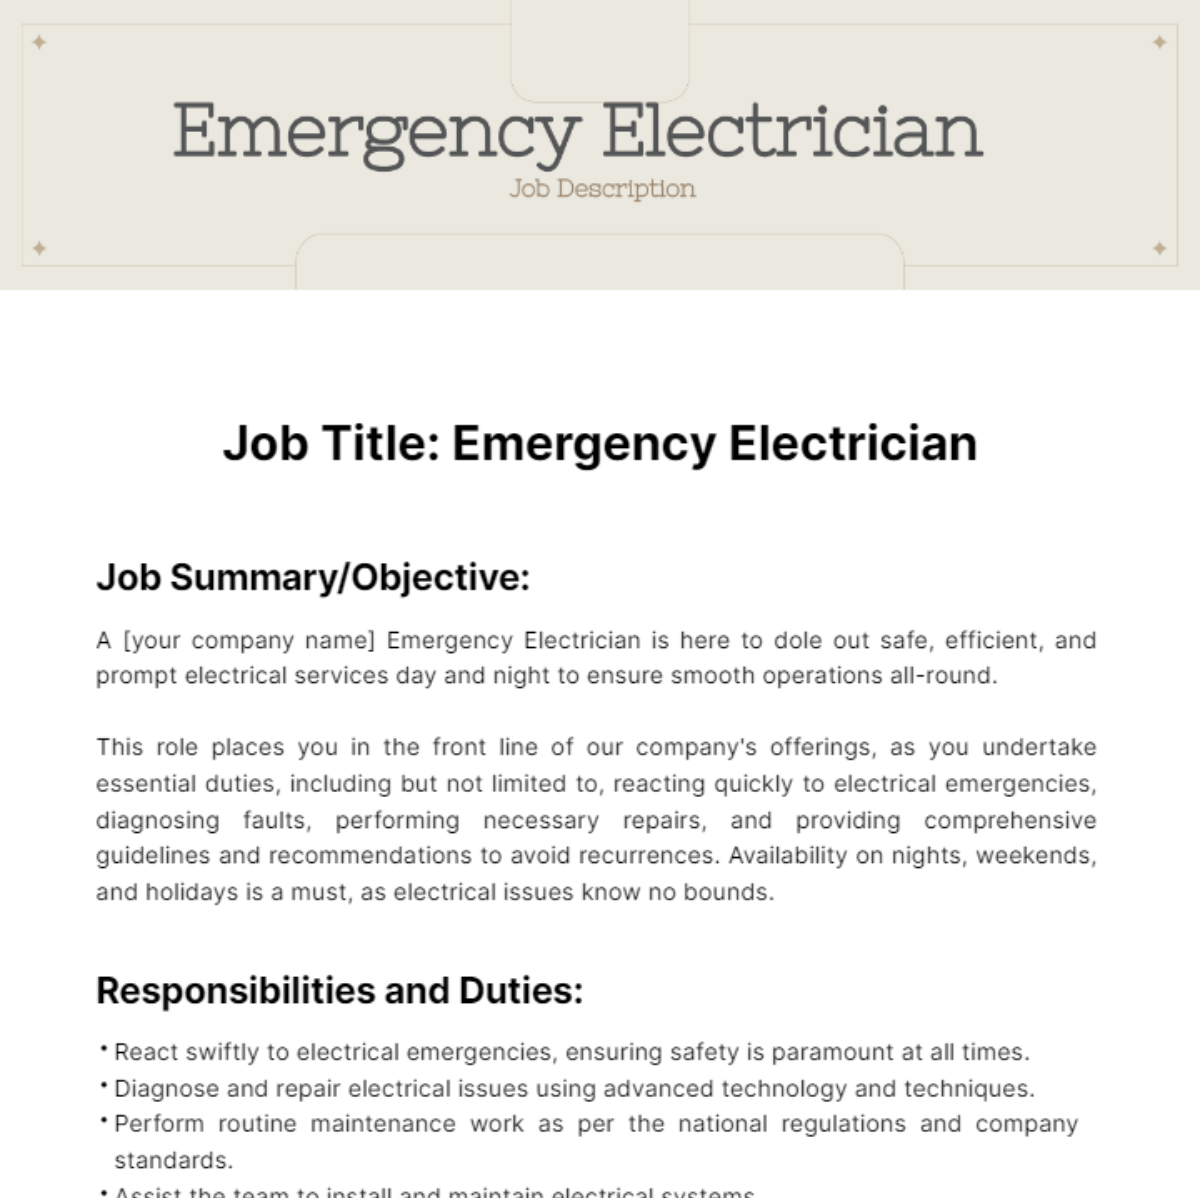 Emergency Electrician Job Description Template